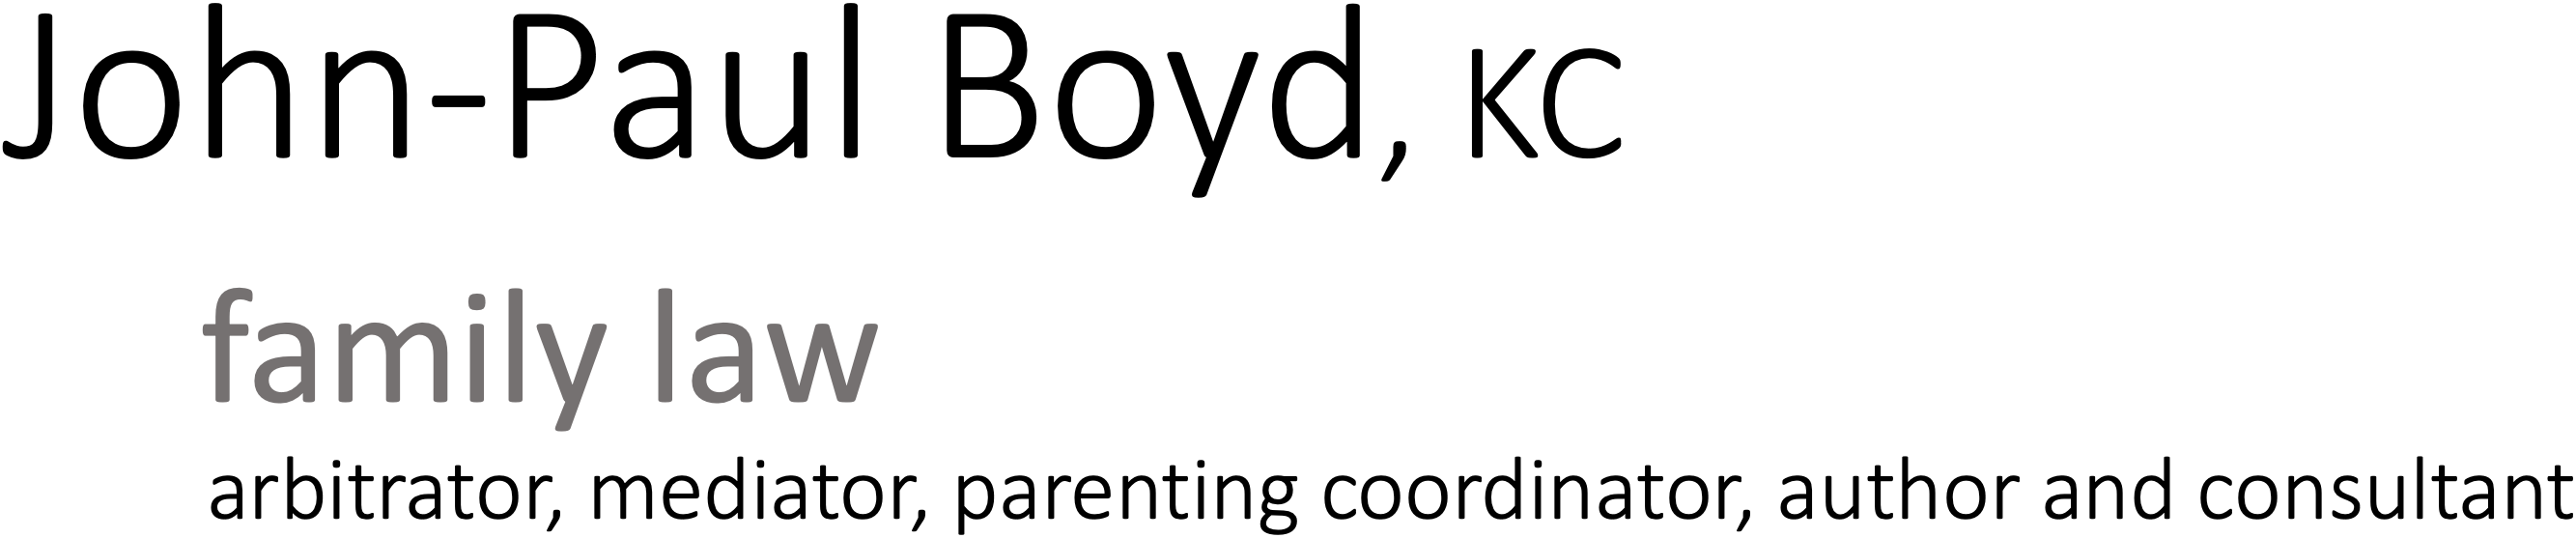 John-Paul E. Boyd, KC